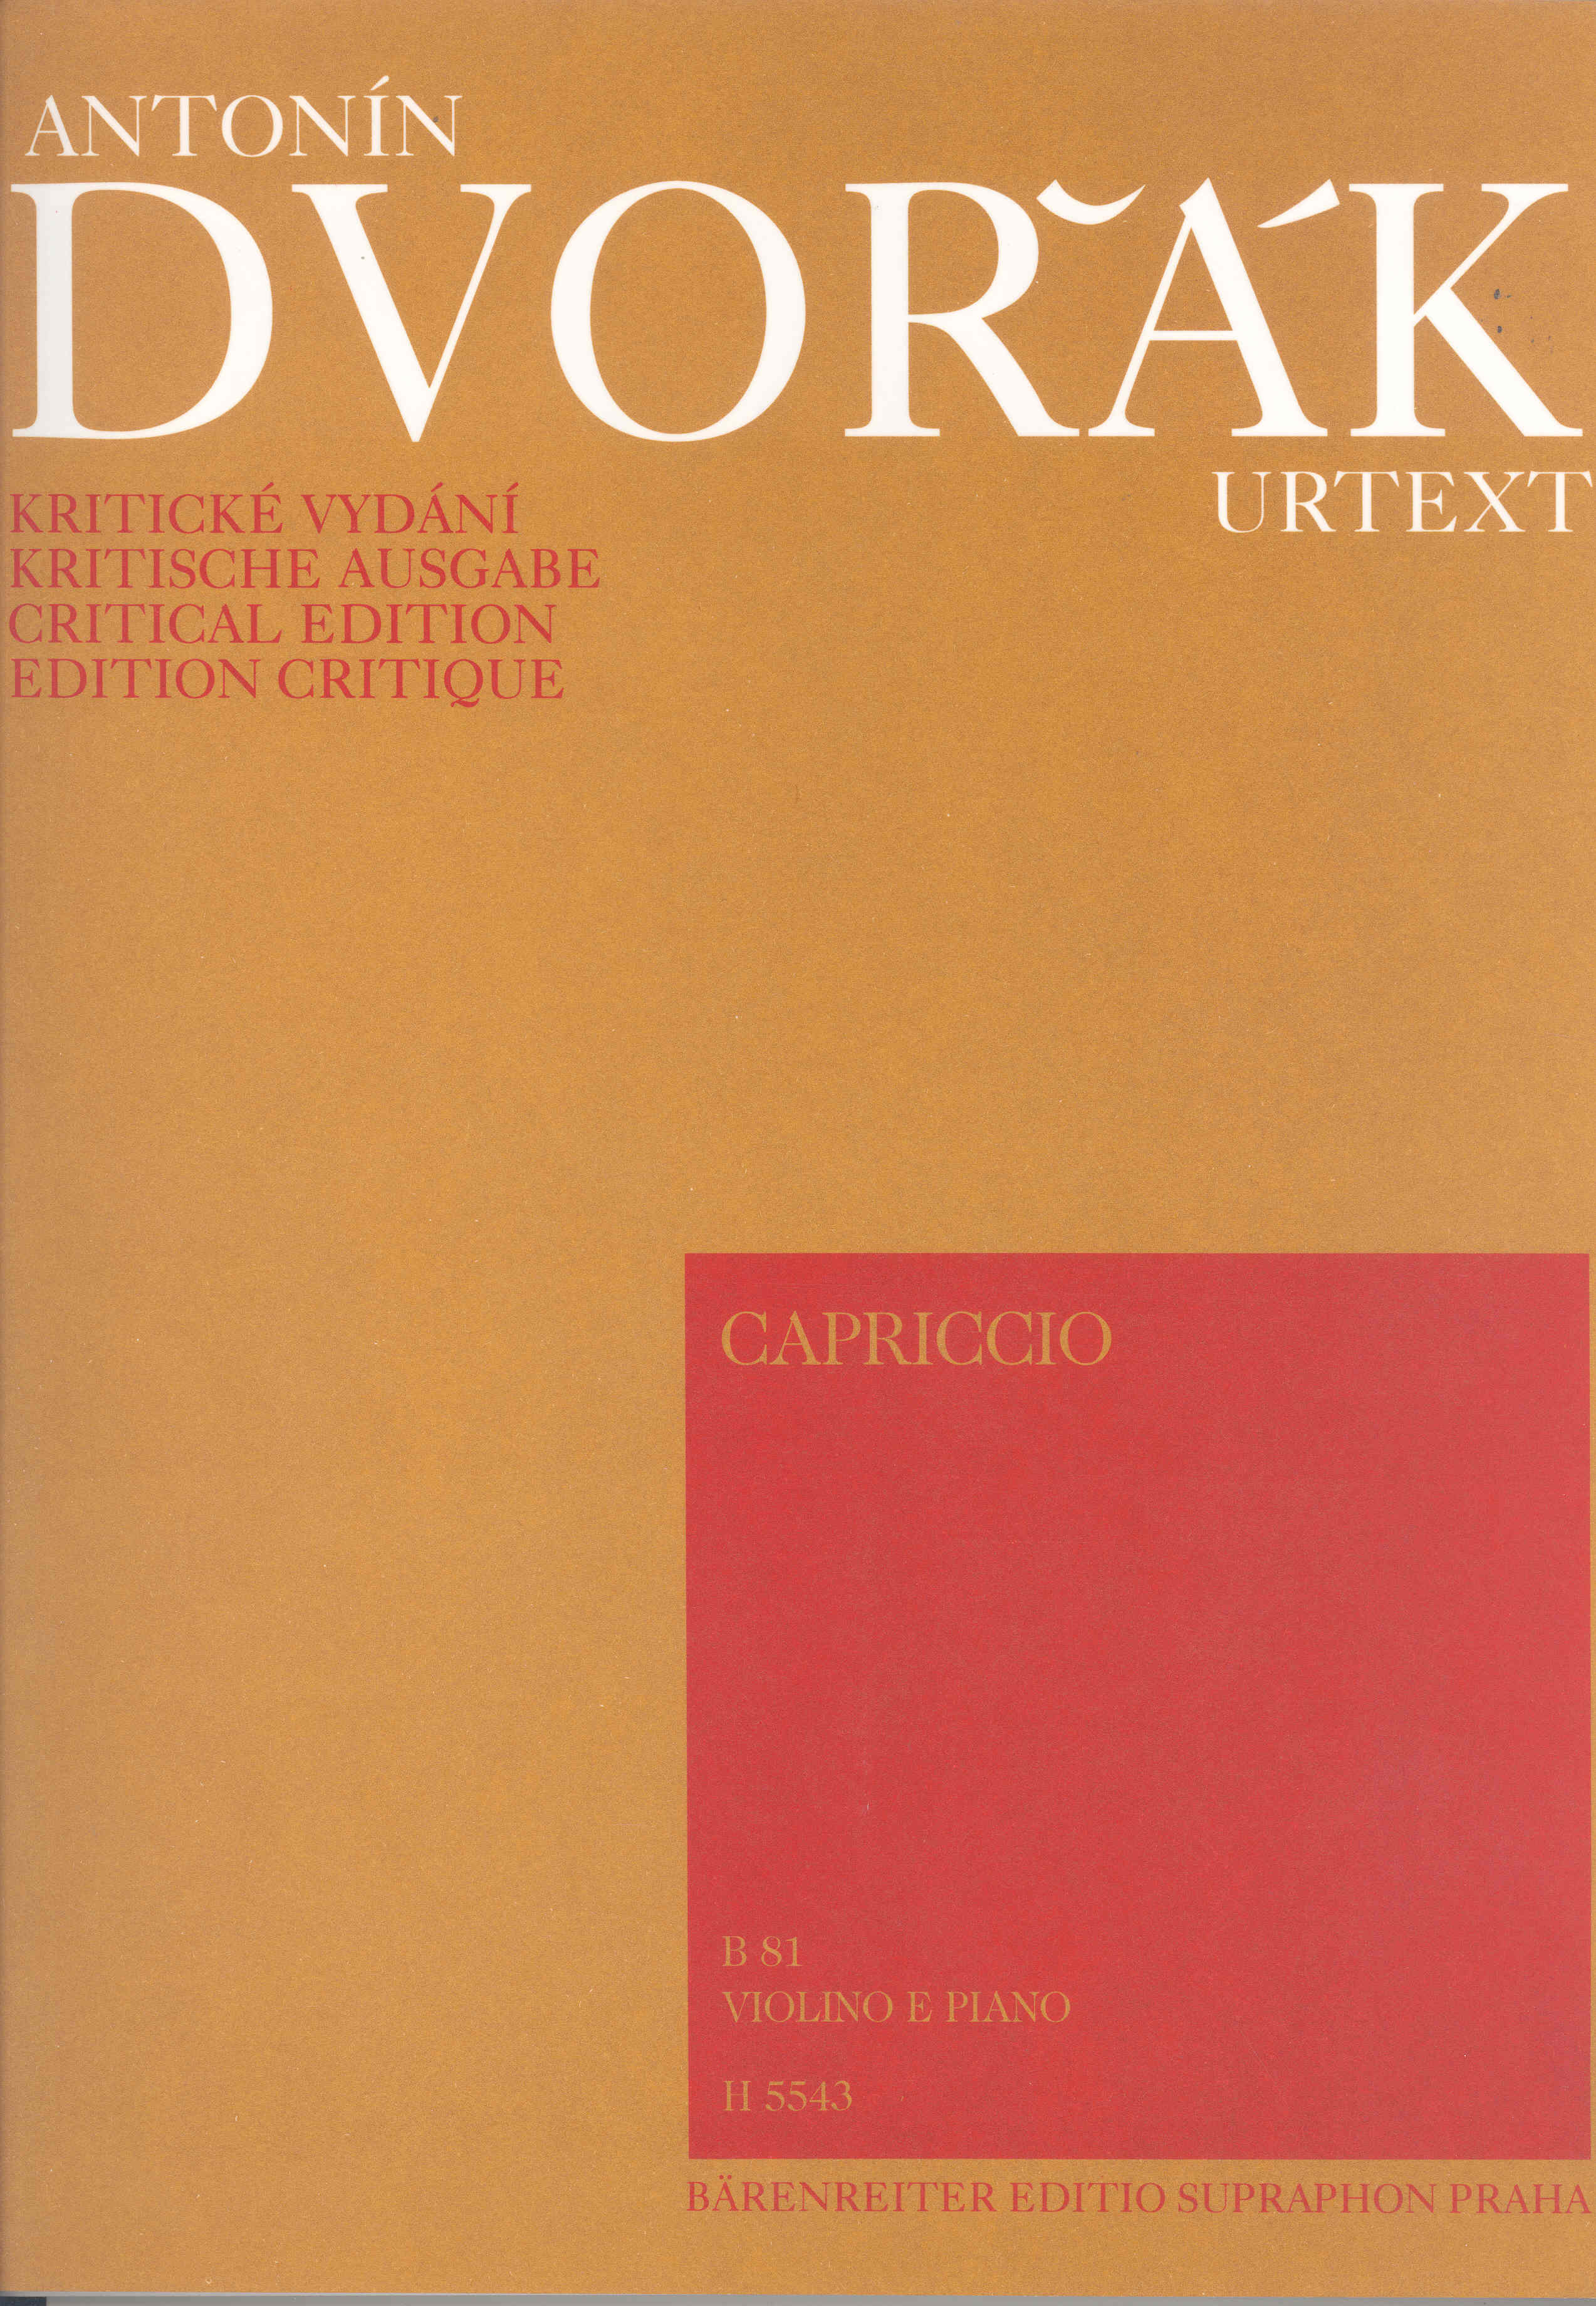 Dvorak Capriccio Violin & Piano Sheet Music Songbook